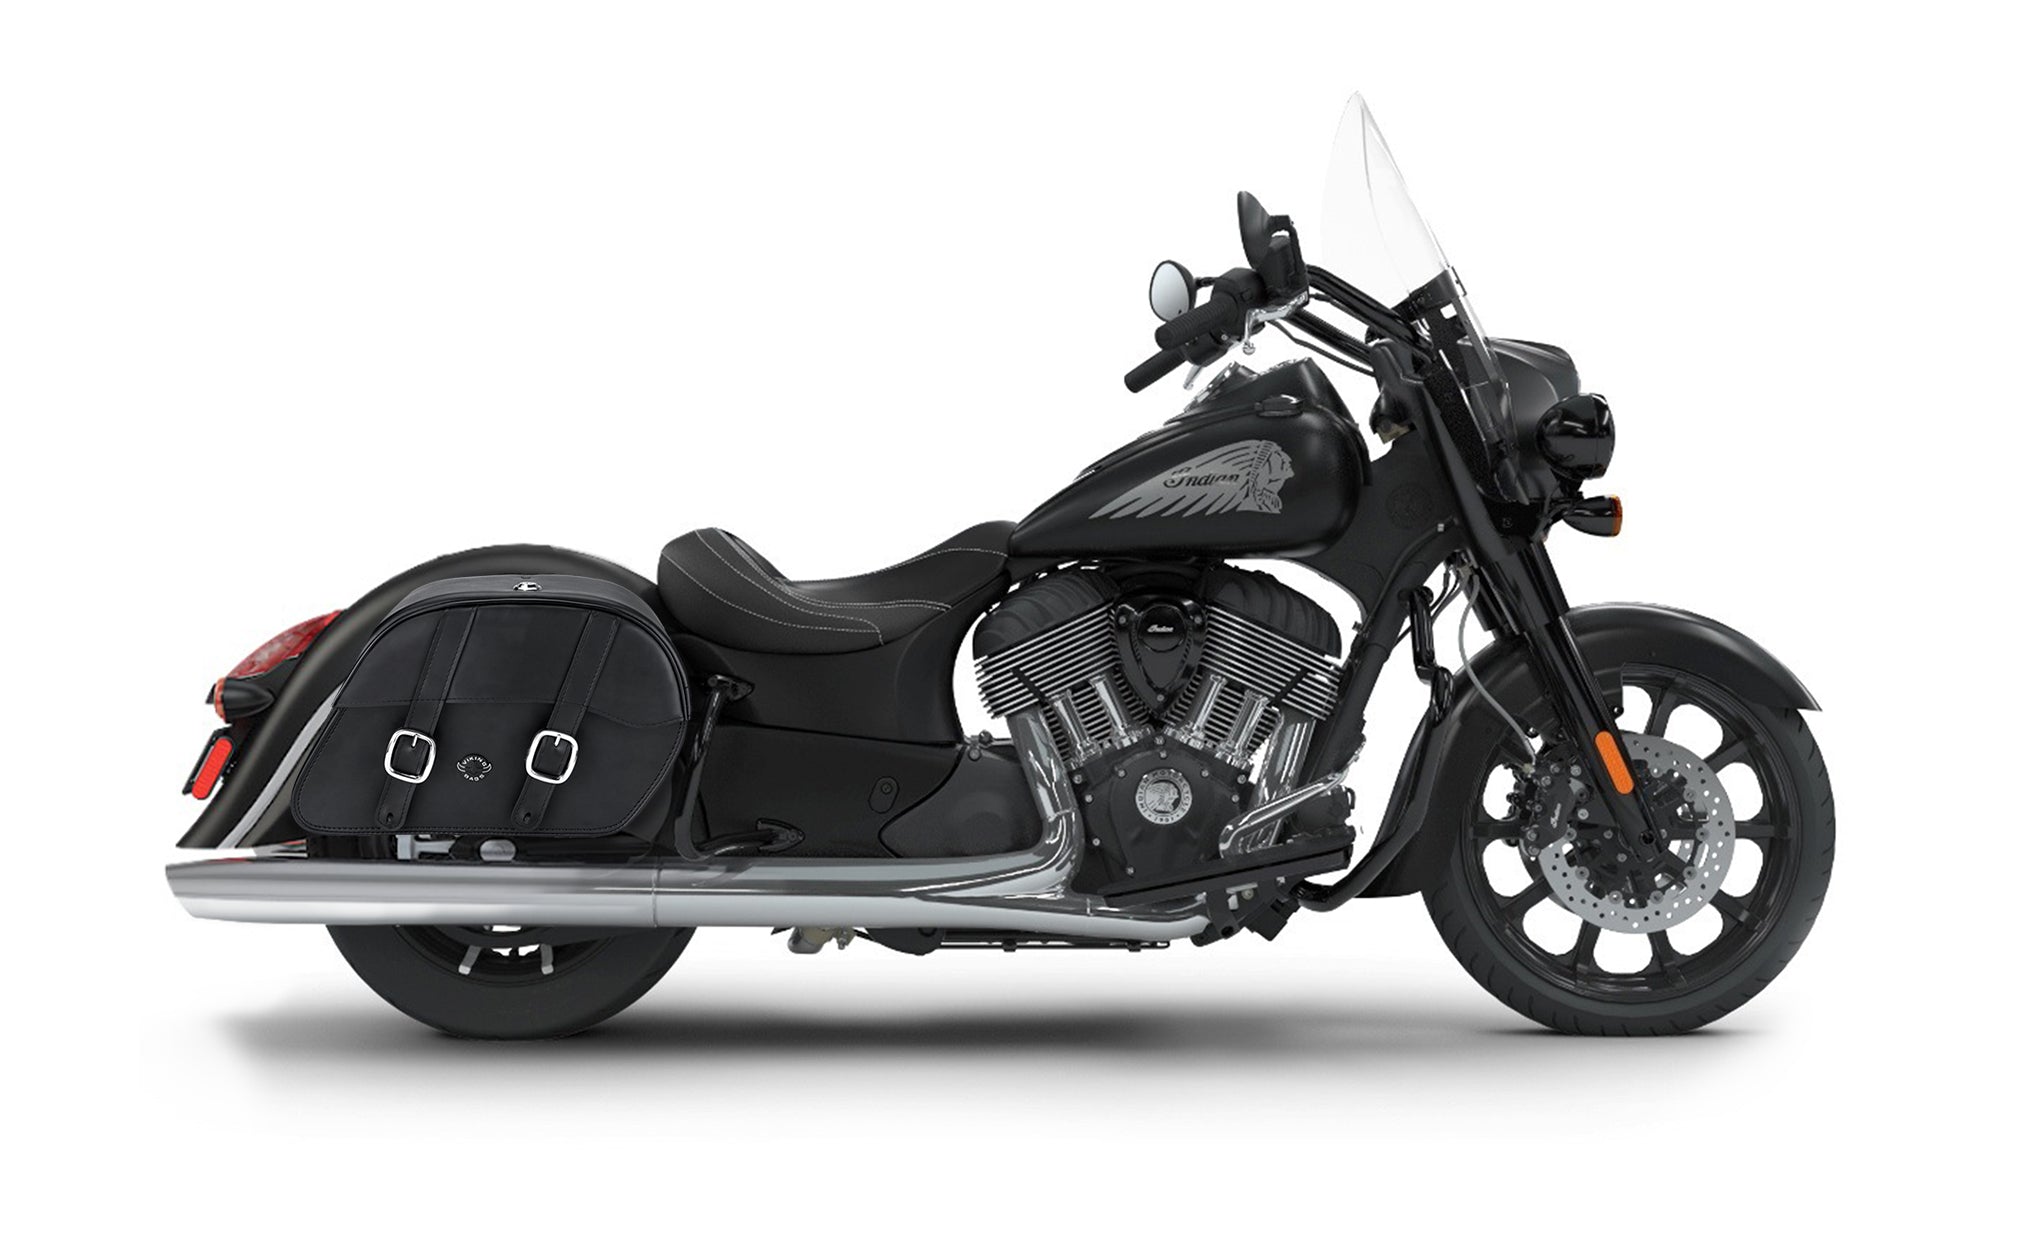 Viking Skarner Large Indian Springfield Darkhorse Leather Motorcycle Saddlebags on Bike Photo @expand